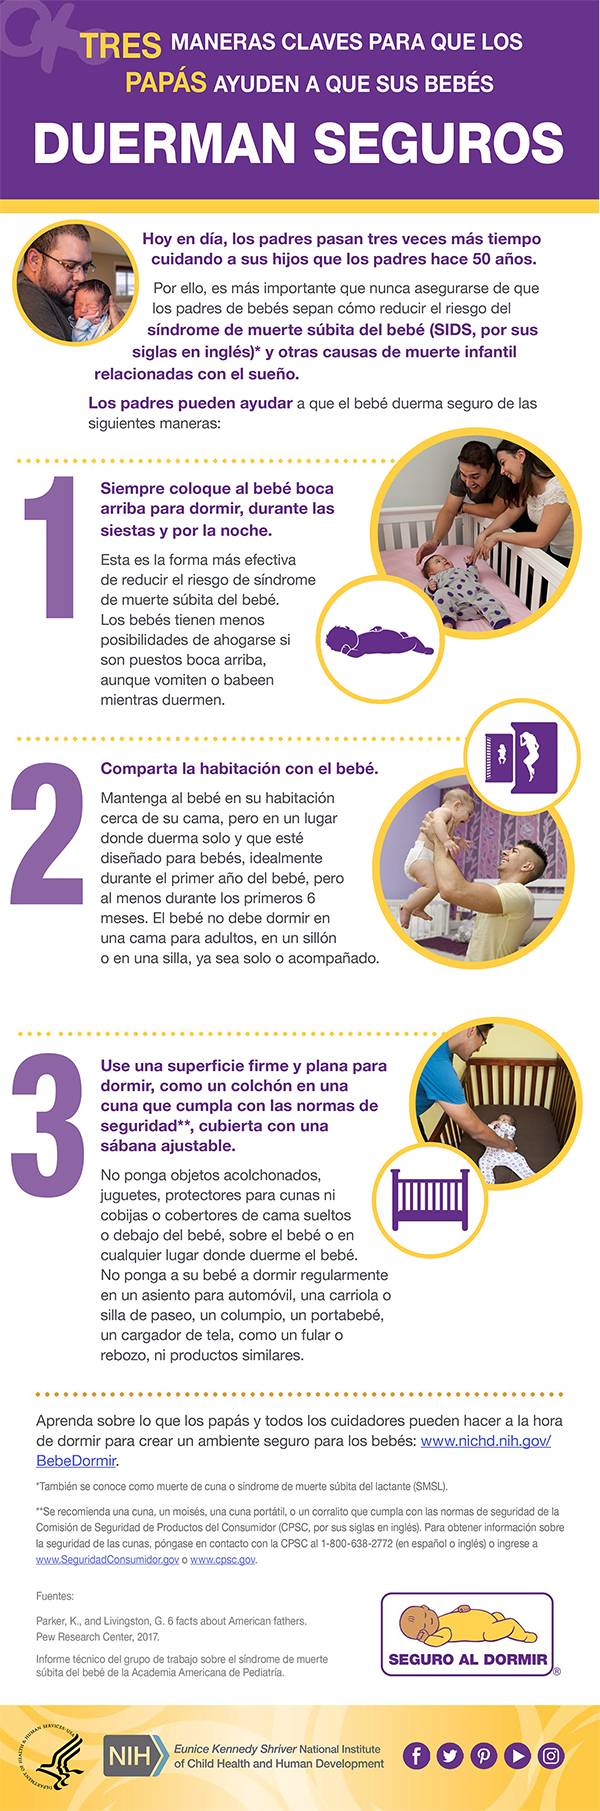 Infografía: Padres ayuden a sus bebes a dormir seguros